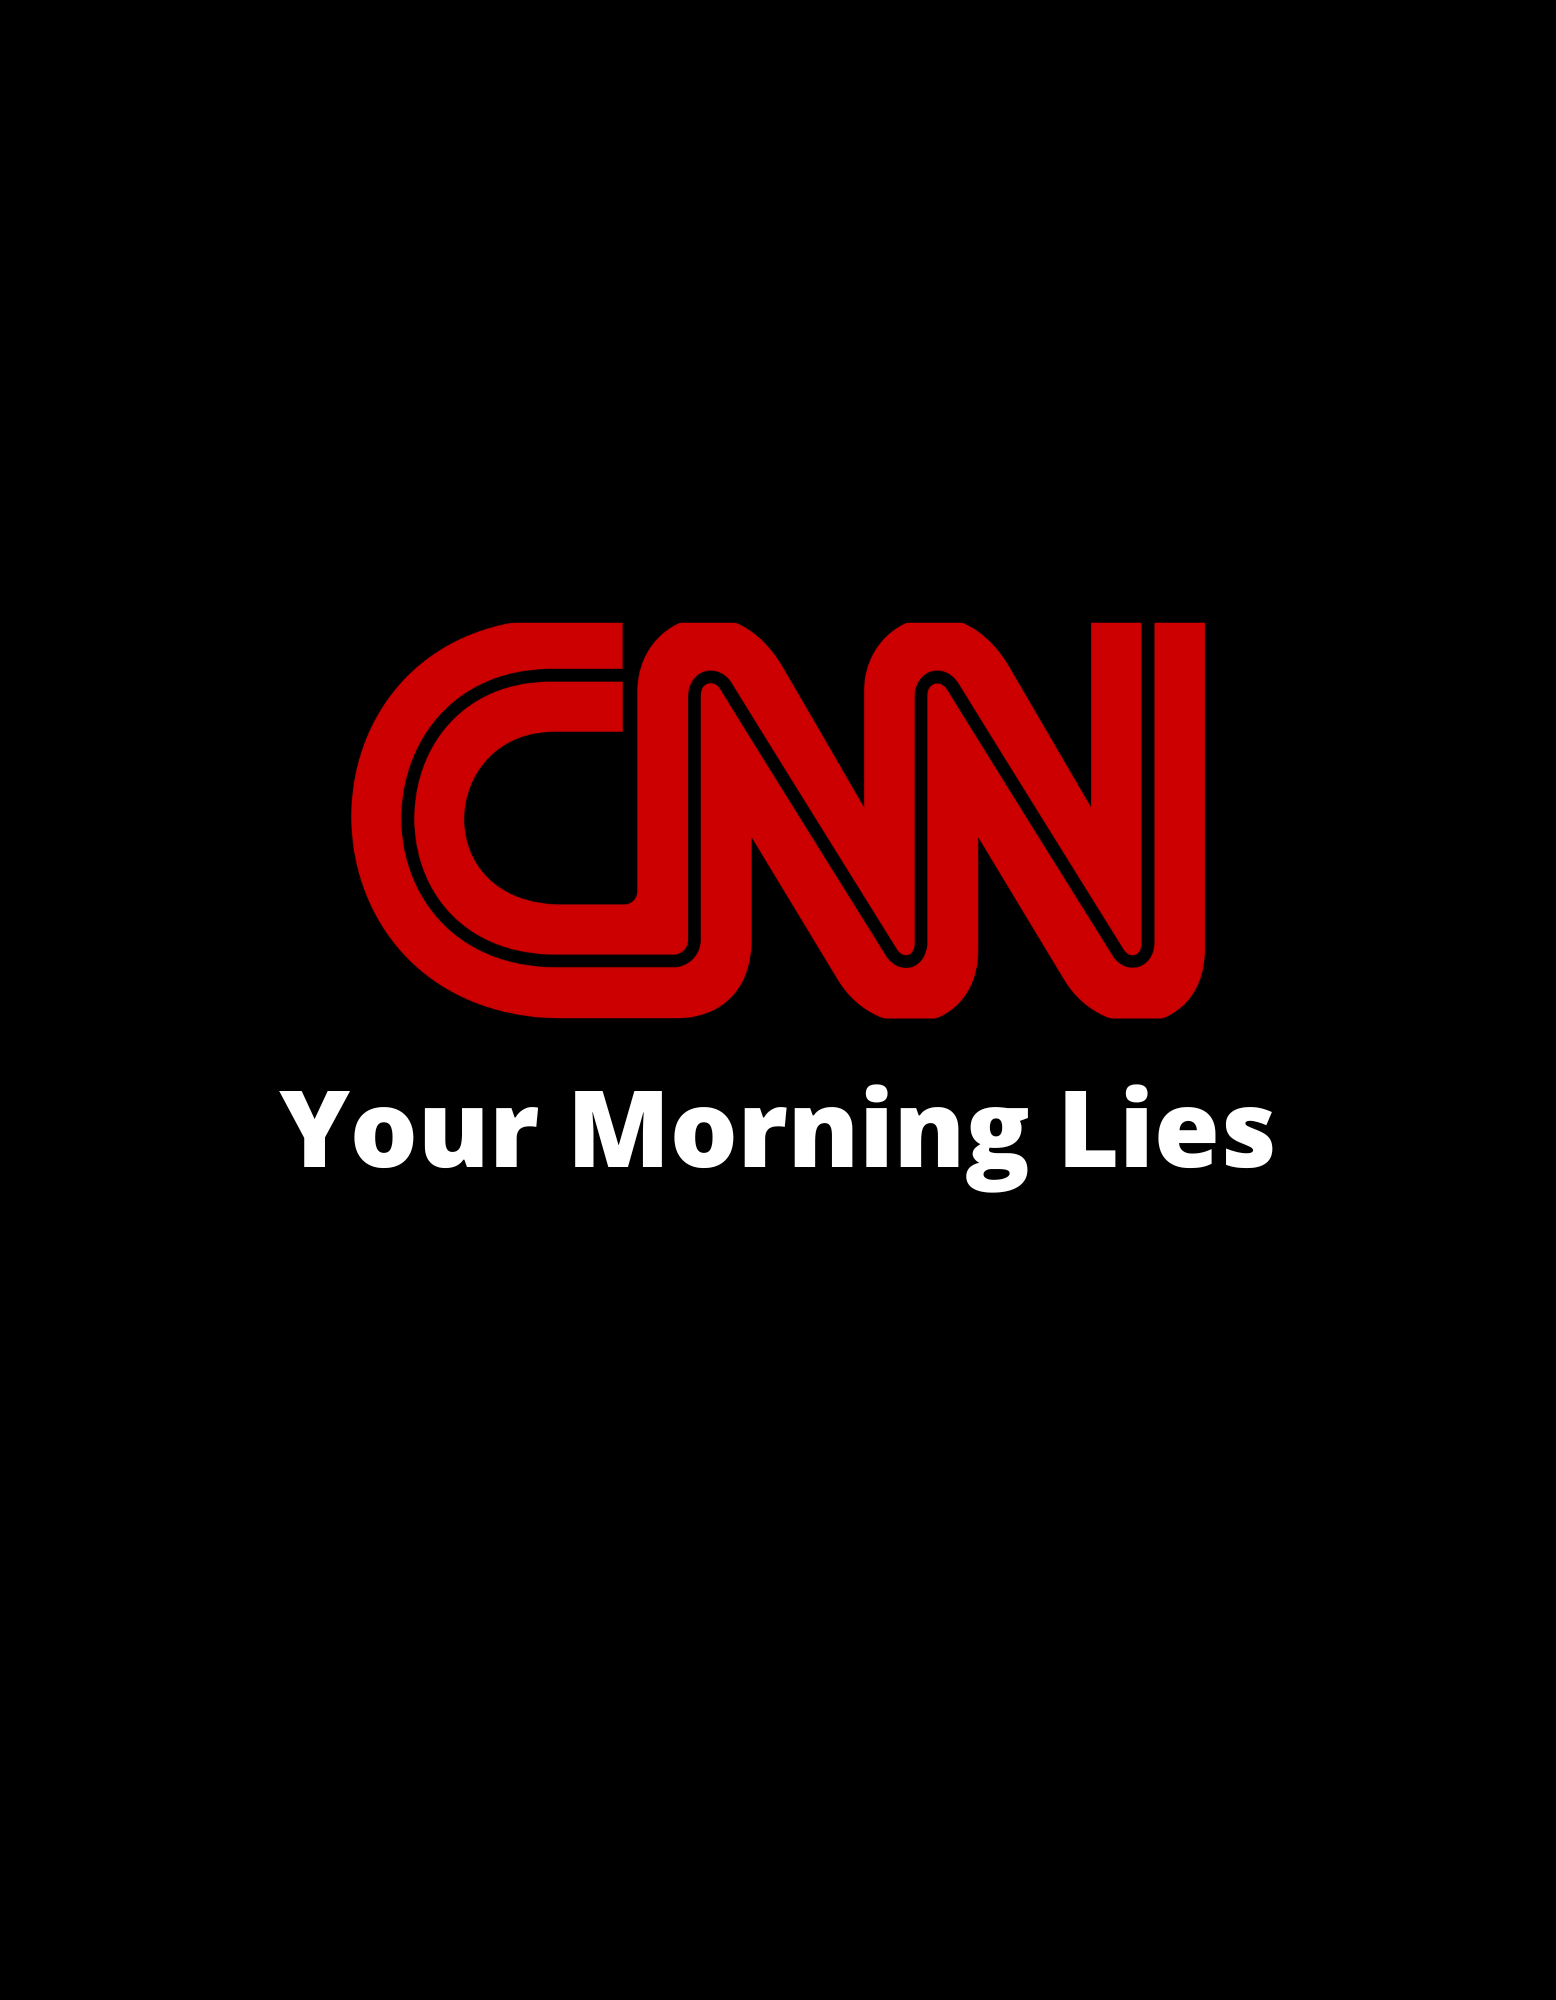 CNN Klistermärke